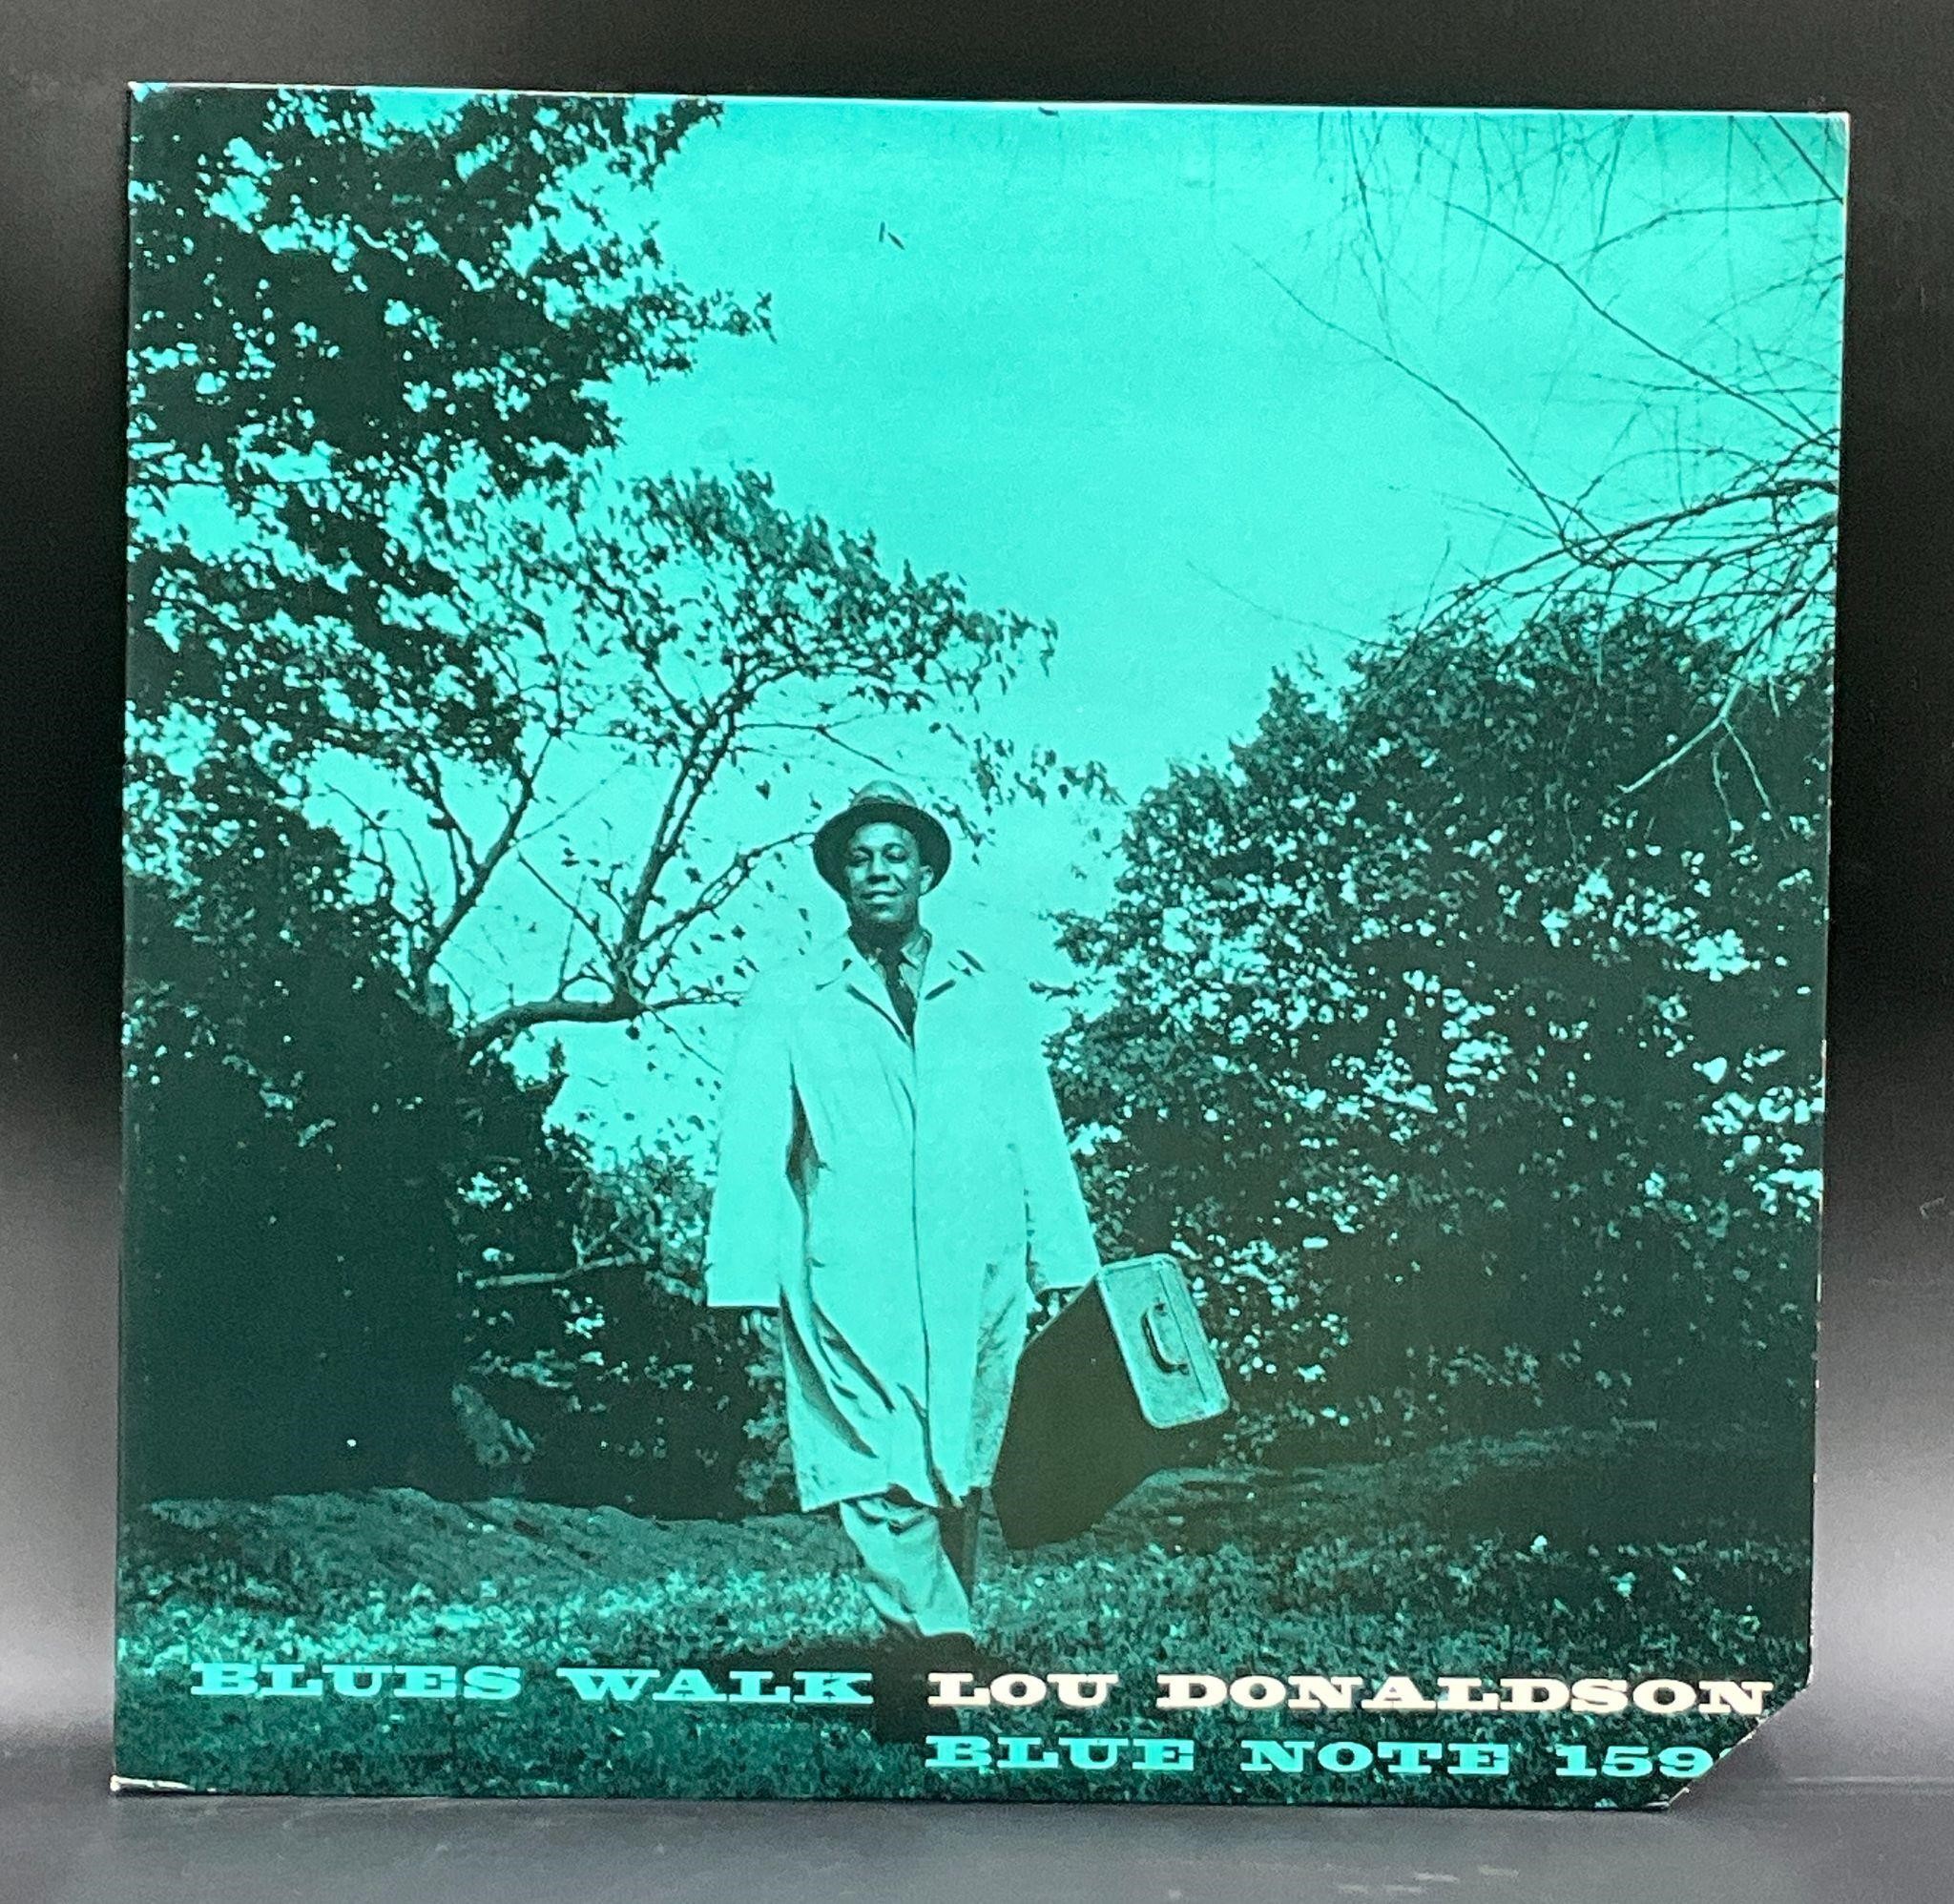 Lou Donaldson "Blues Walk" 1984 Japan Reissue